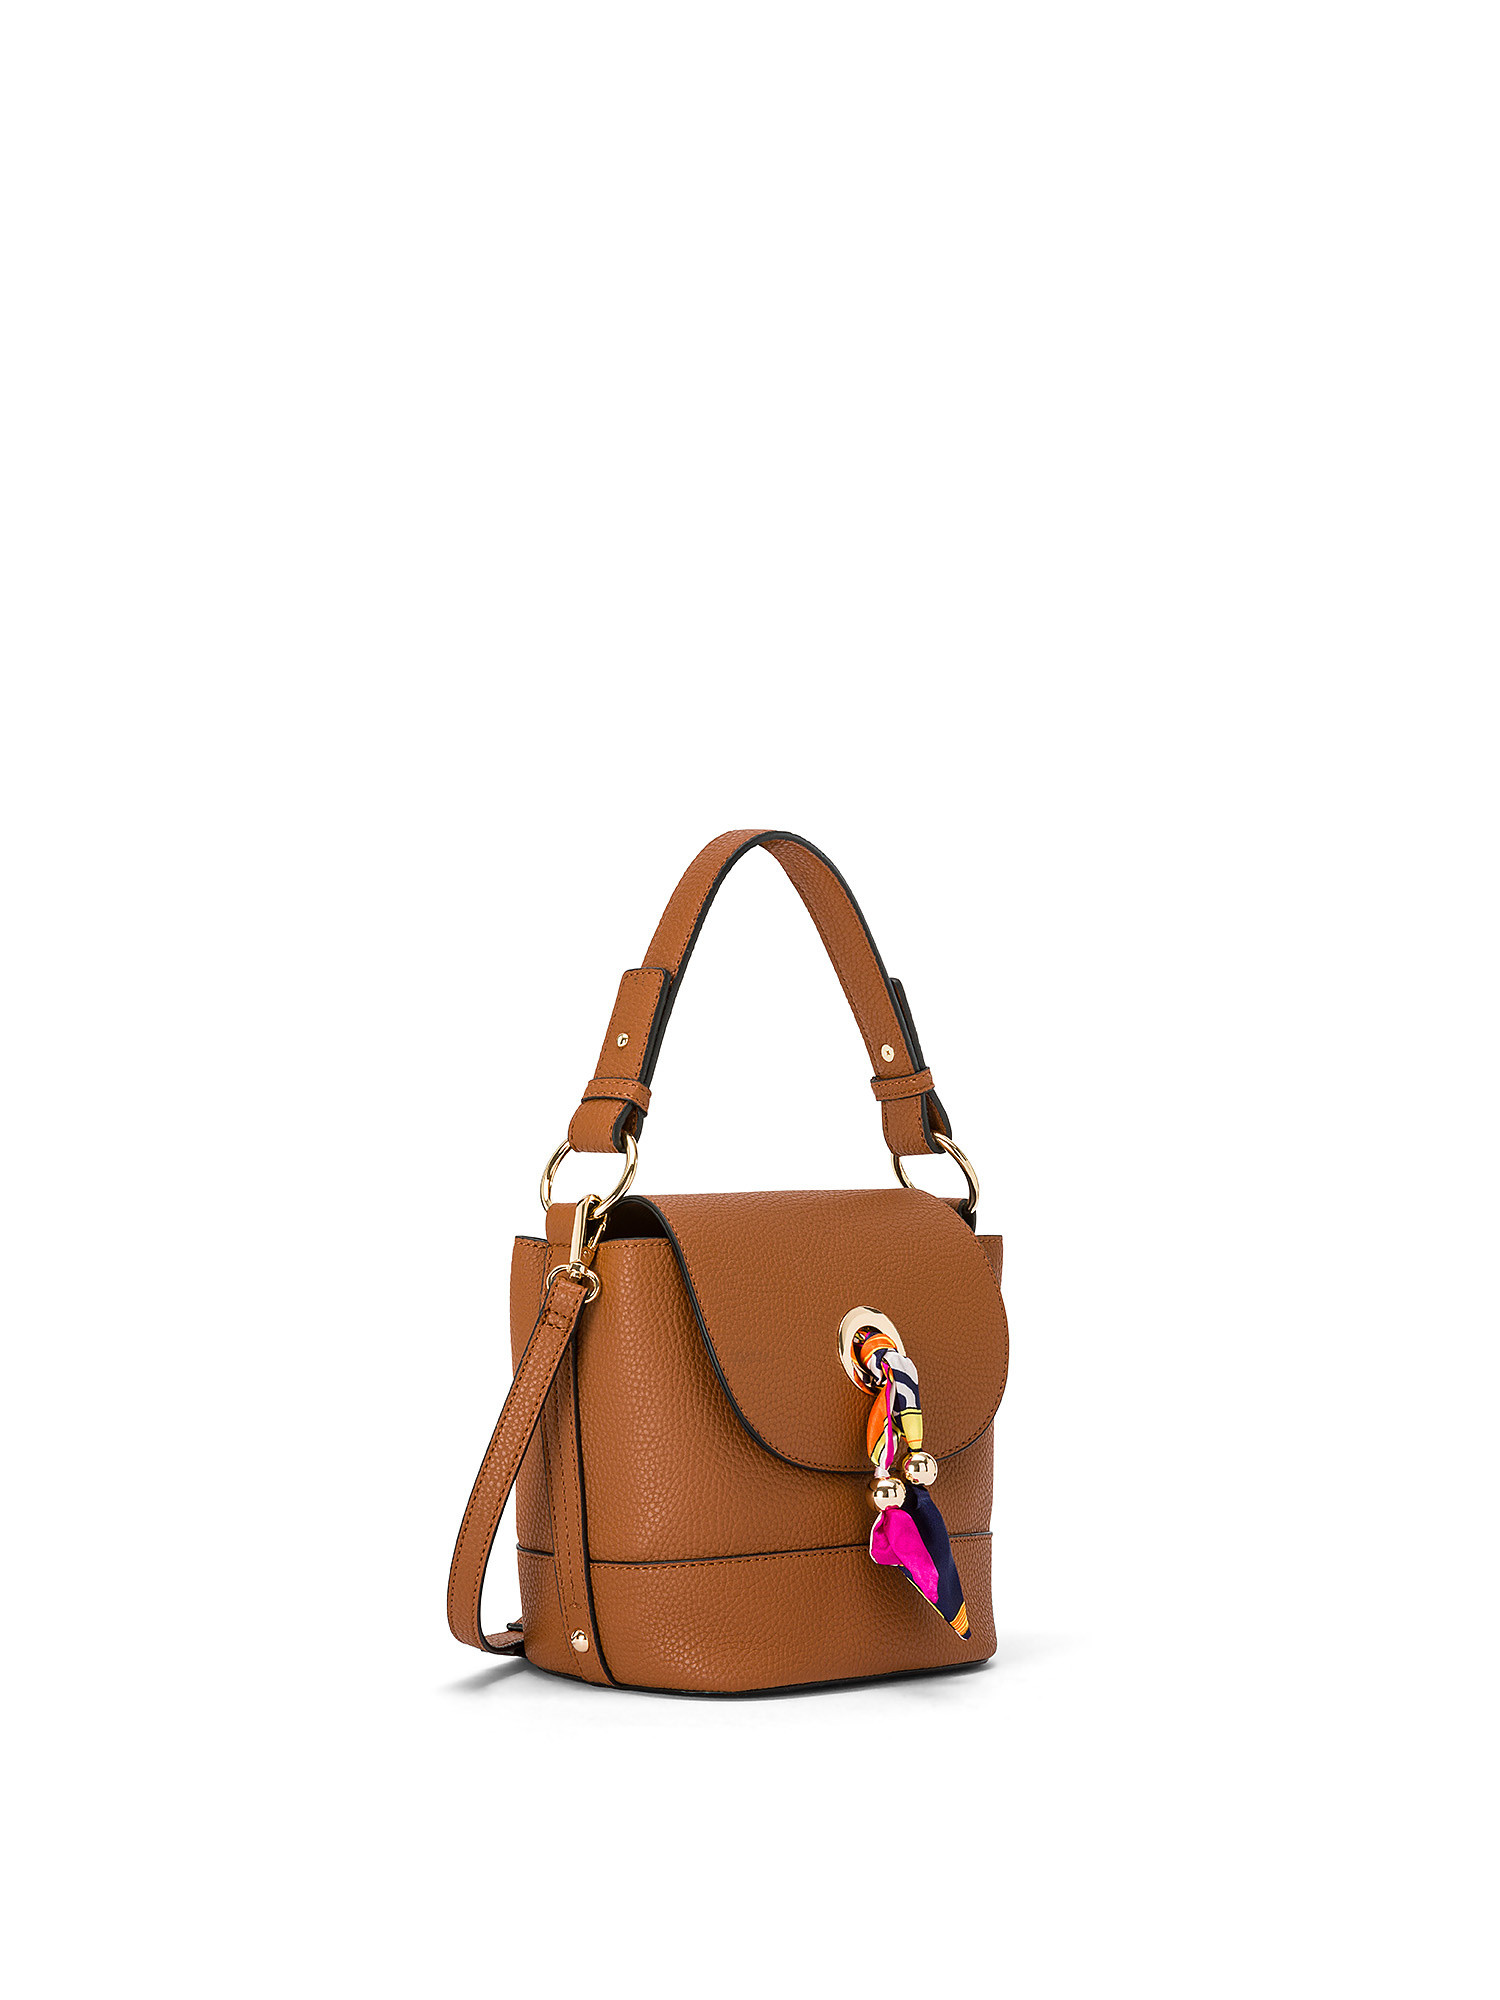 Koan - Handbag, Brown, large image number 1